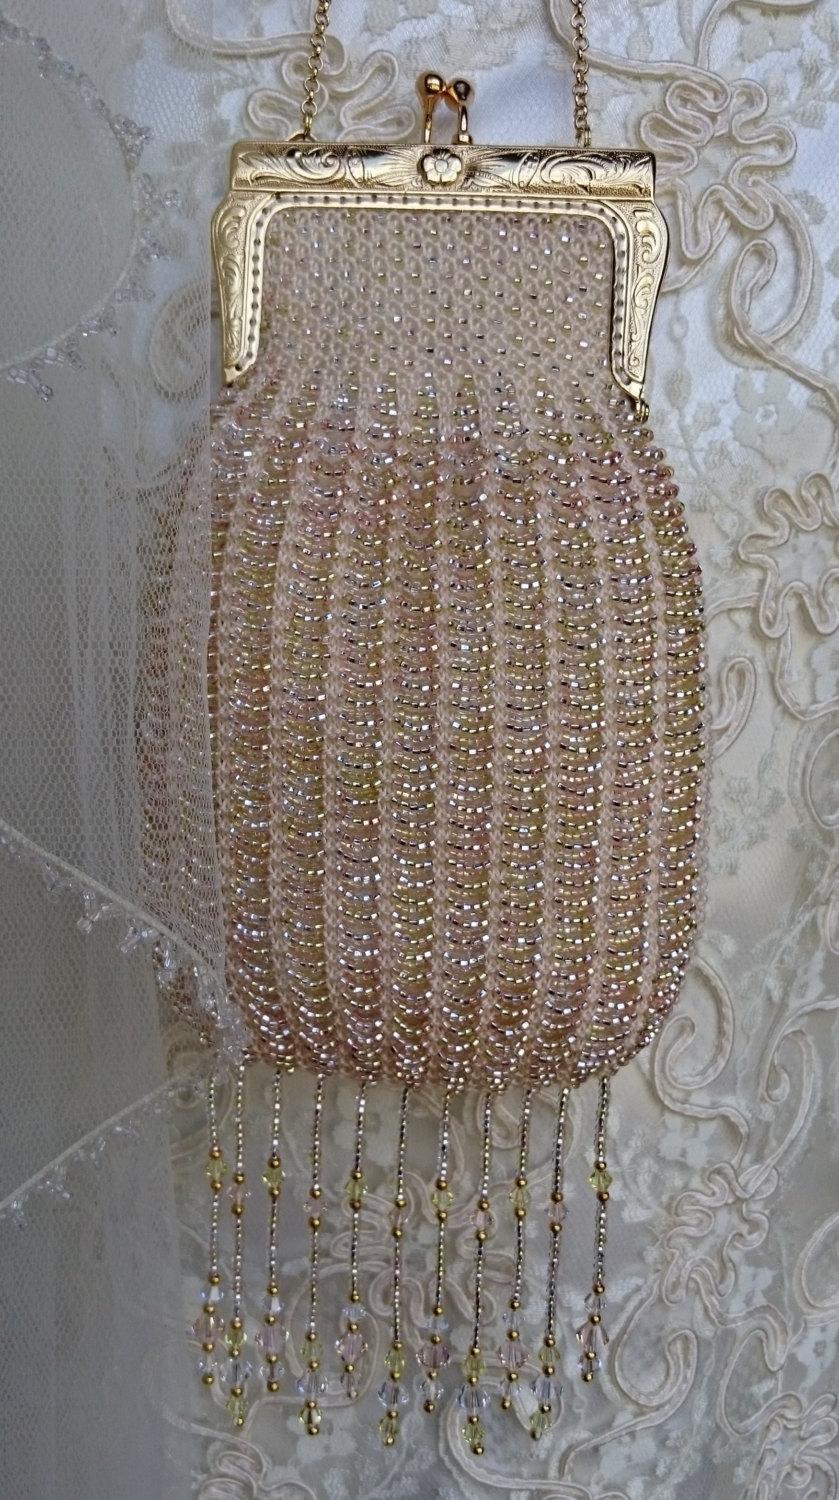 Wedding - SALE - Wedding Purse, Beaded Bridal Purse, Unique Bridal Purse, Bead Knitted Purse, Handmade, Czech Beads, Swarovski Crystals